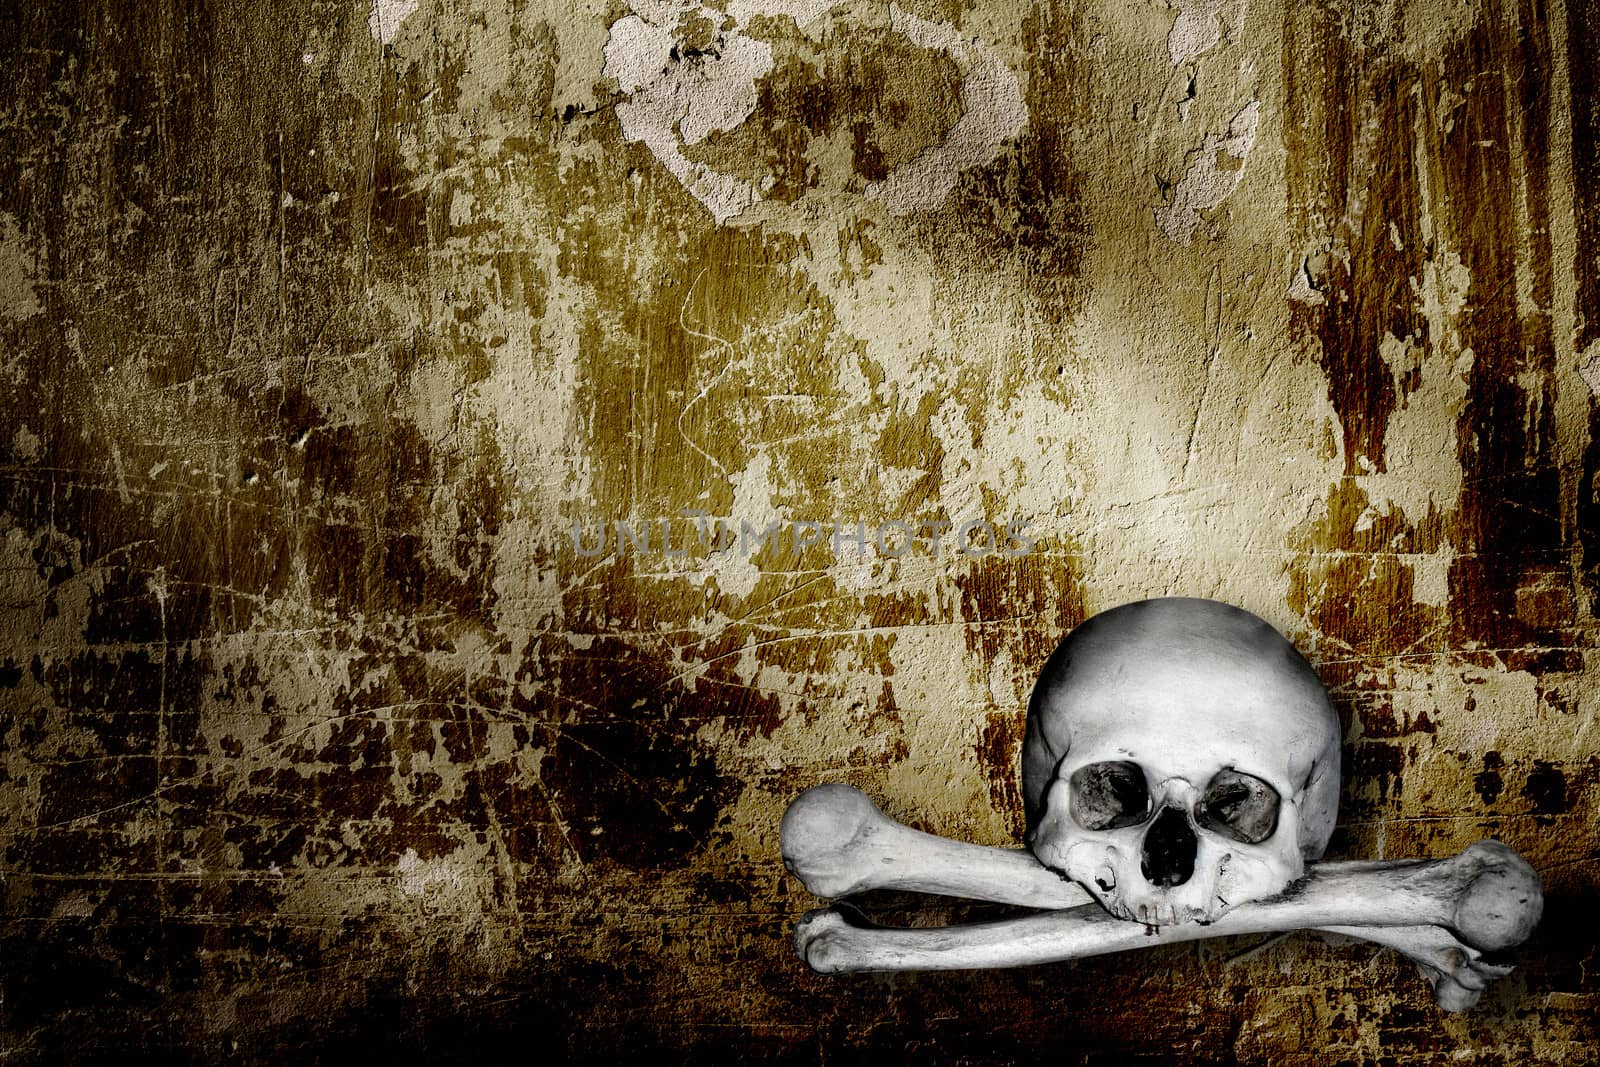 Grunge background with human skulls and bones